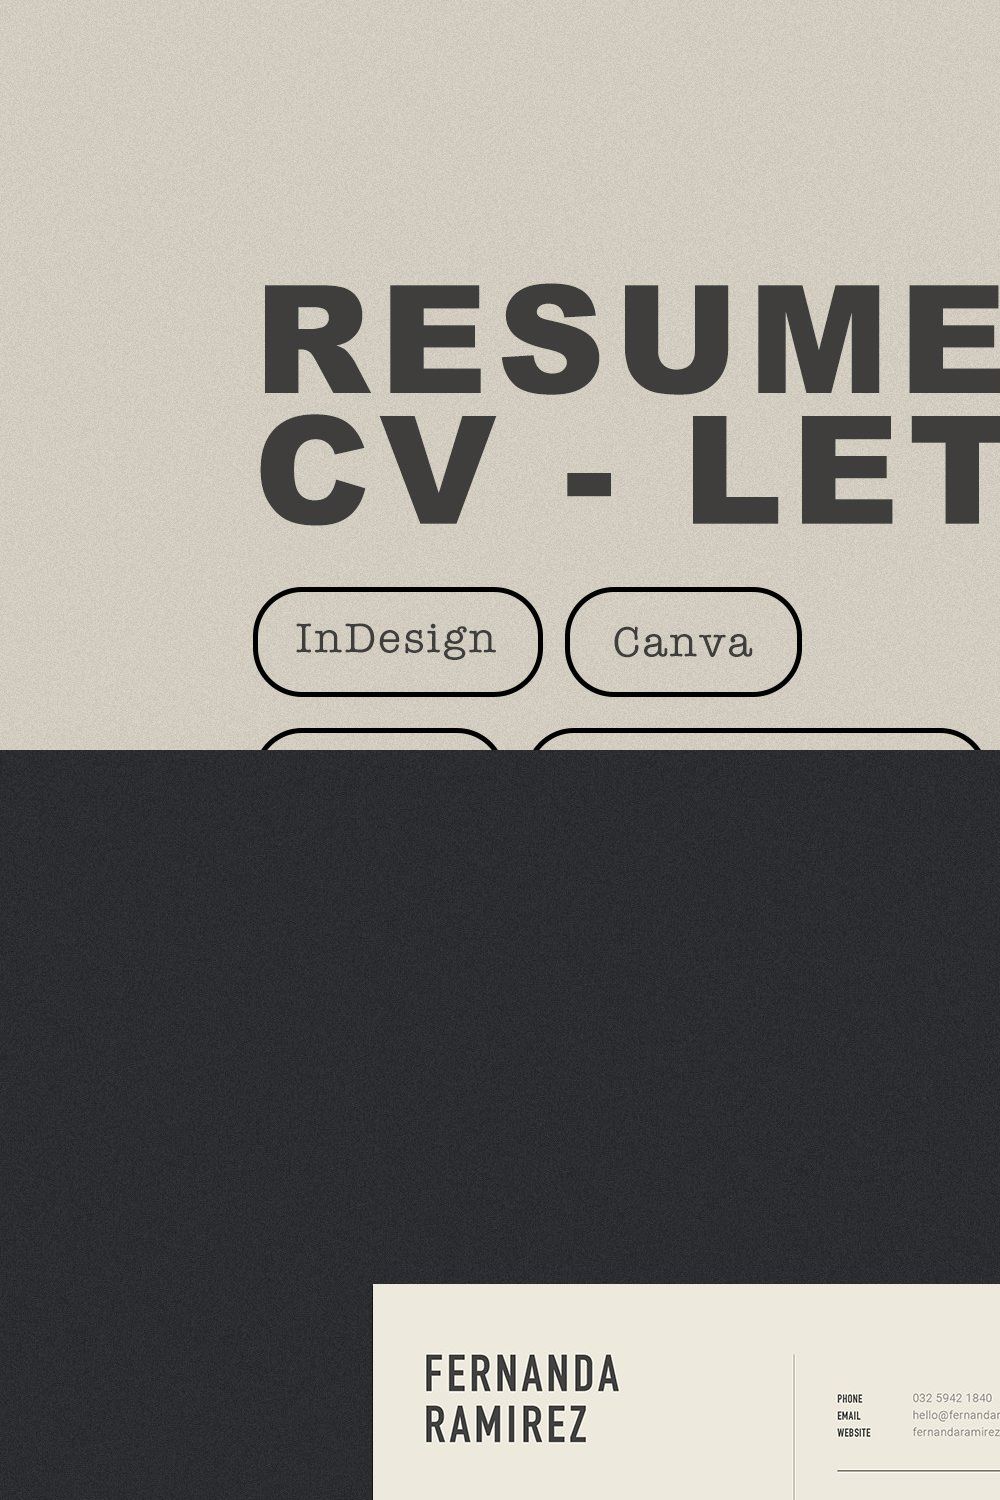 COS I Resume - CV - Letter pinterest preview image.